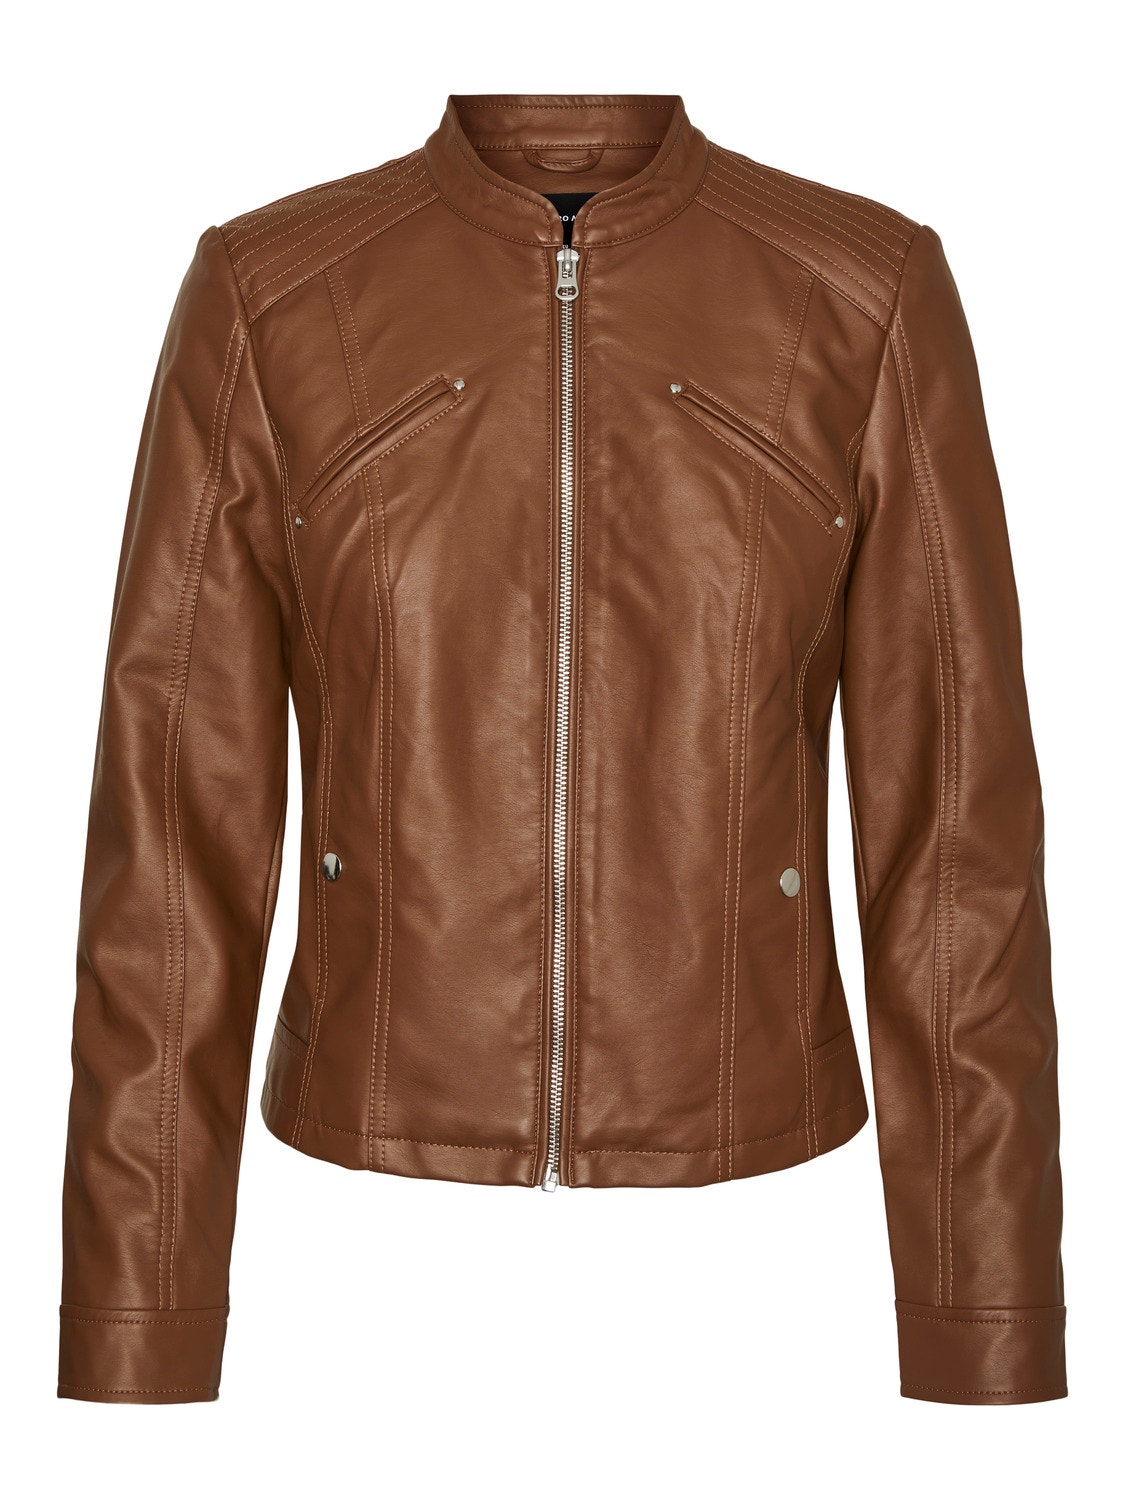 Vero Moda VMFAVODONA Jacket -Cognac - 10288555